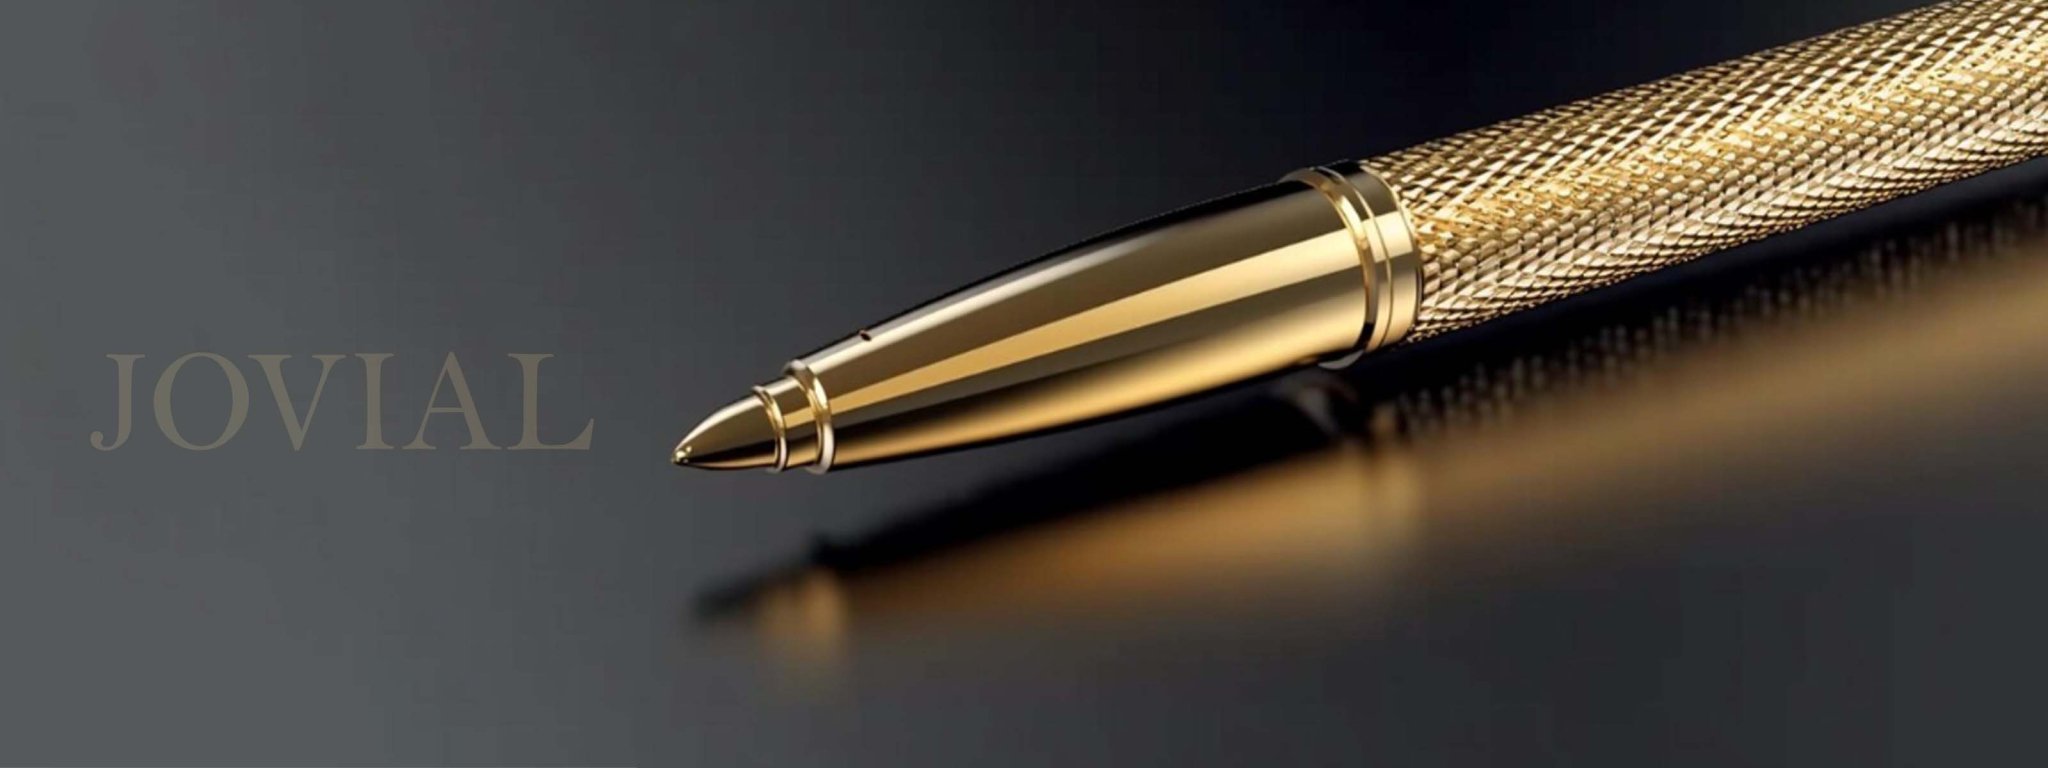 Premium Jovial Pens: Enhancing Your Writing Experience - Takreem.jo